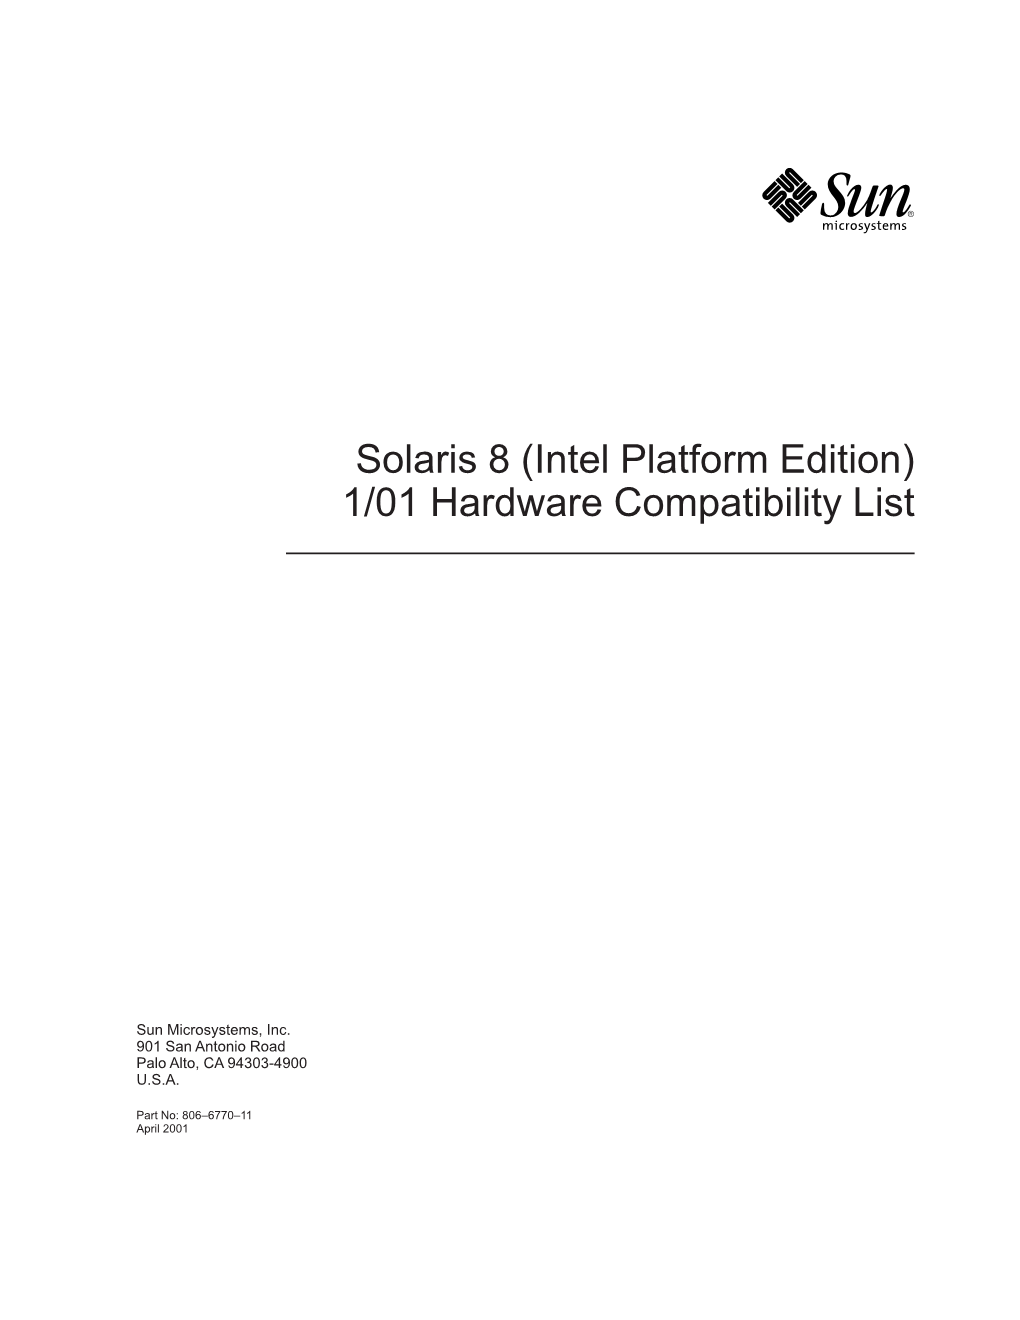 Intel Platform Edition) 1/01 Hardware Compatibility List